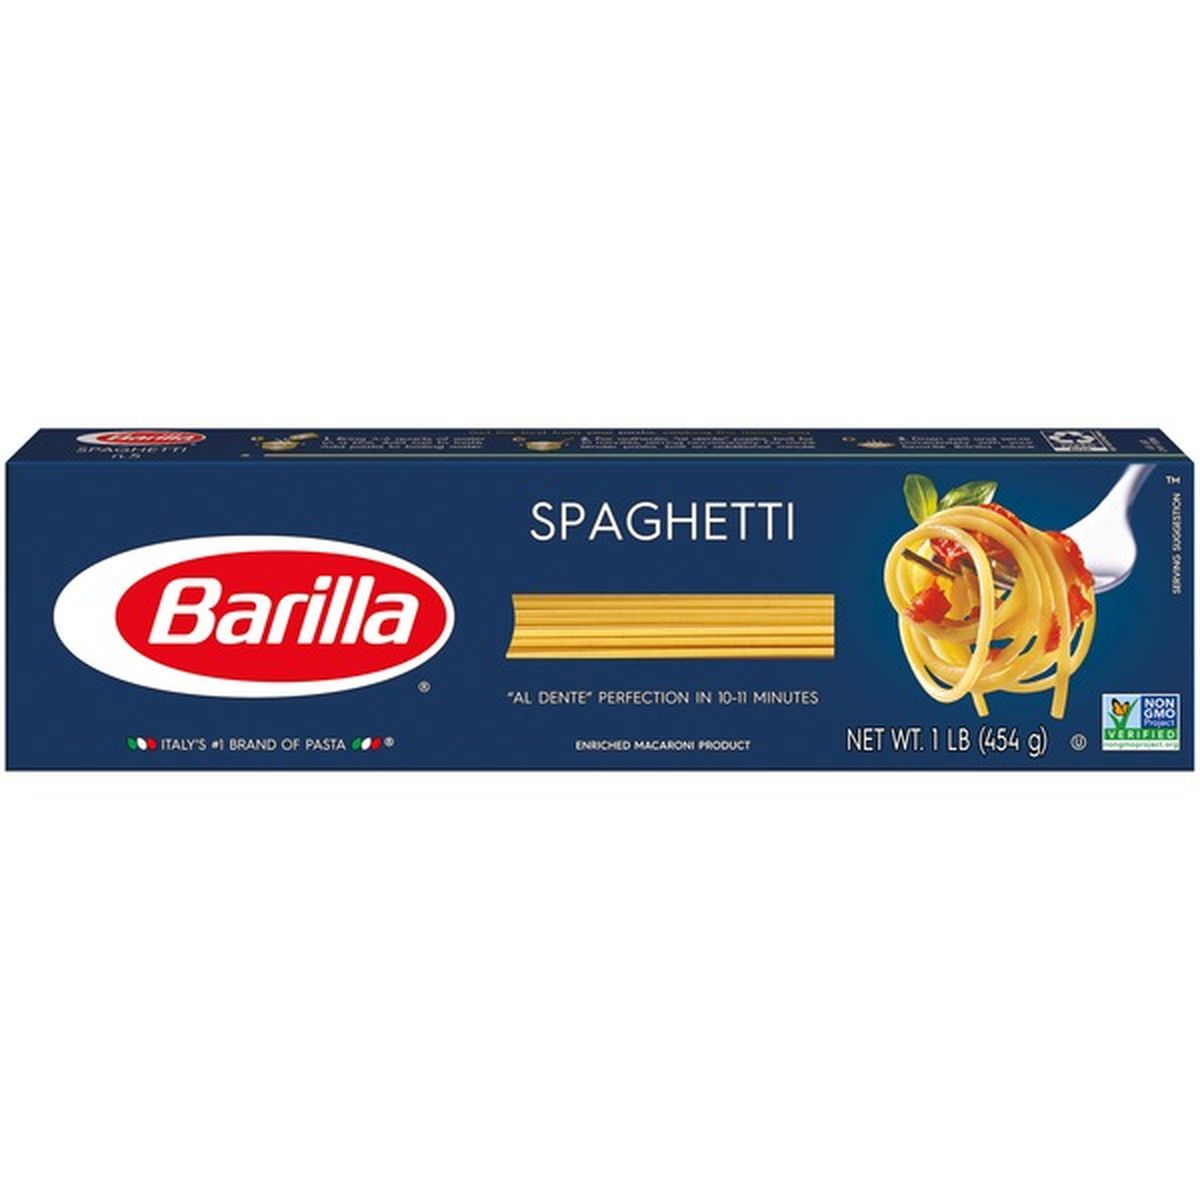 cooked spaghetti